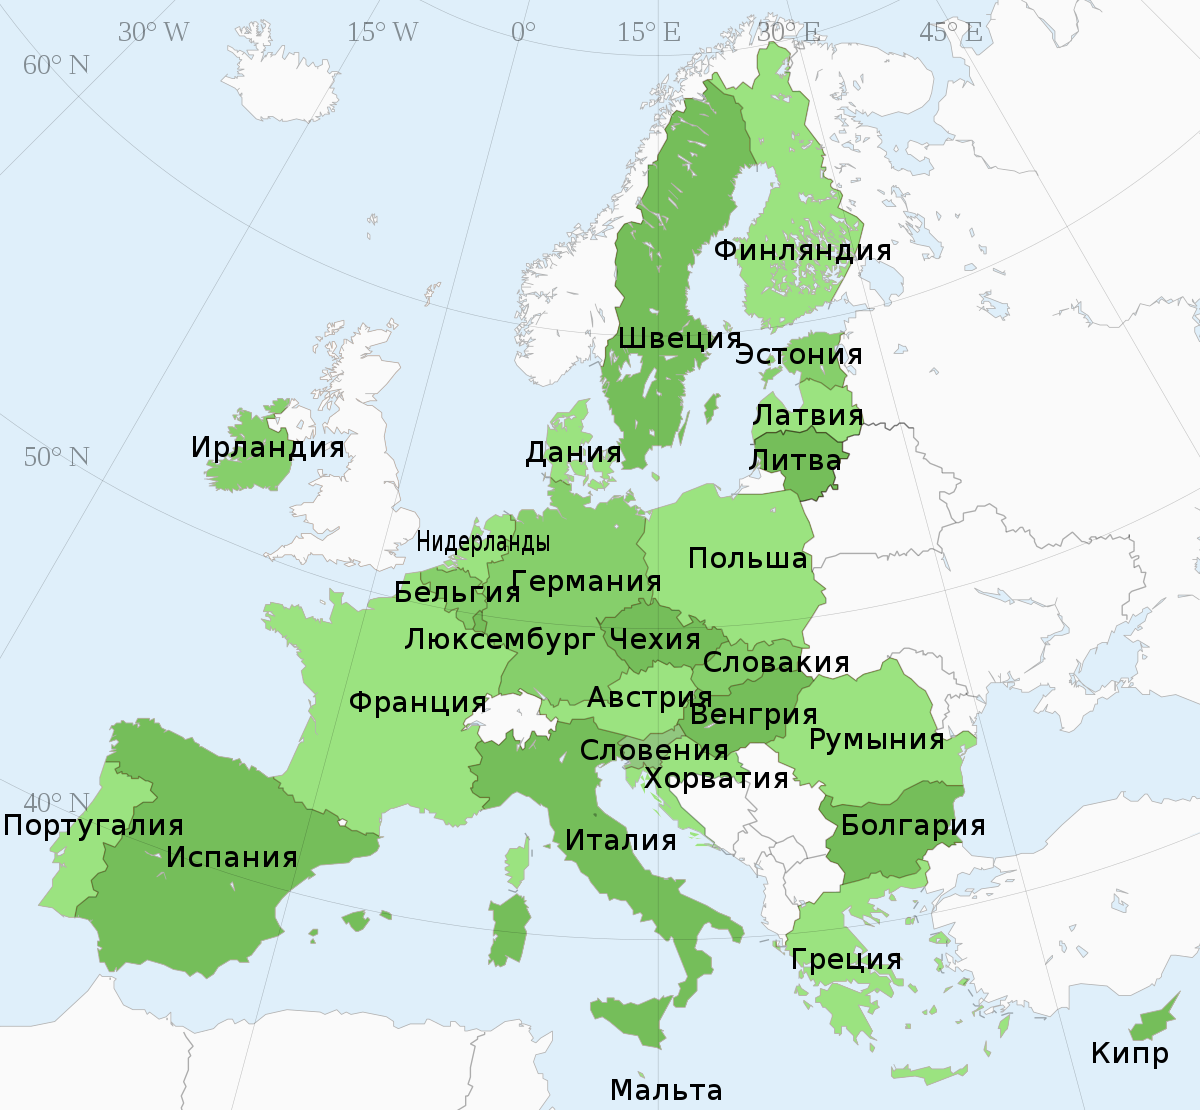 ЕК предложила новые правила въезда на территории Евросоюза